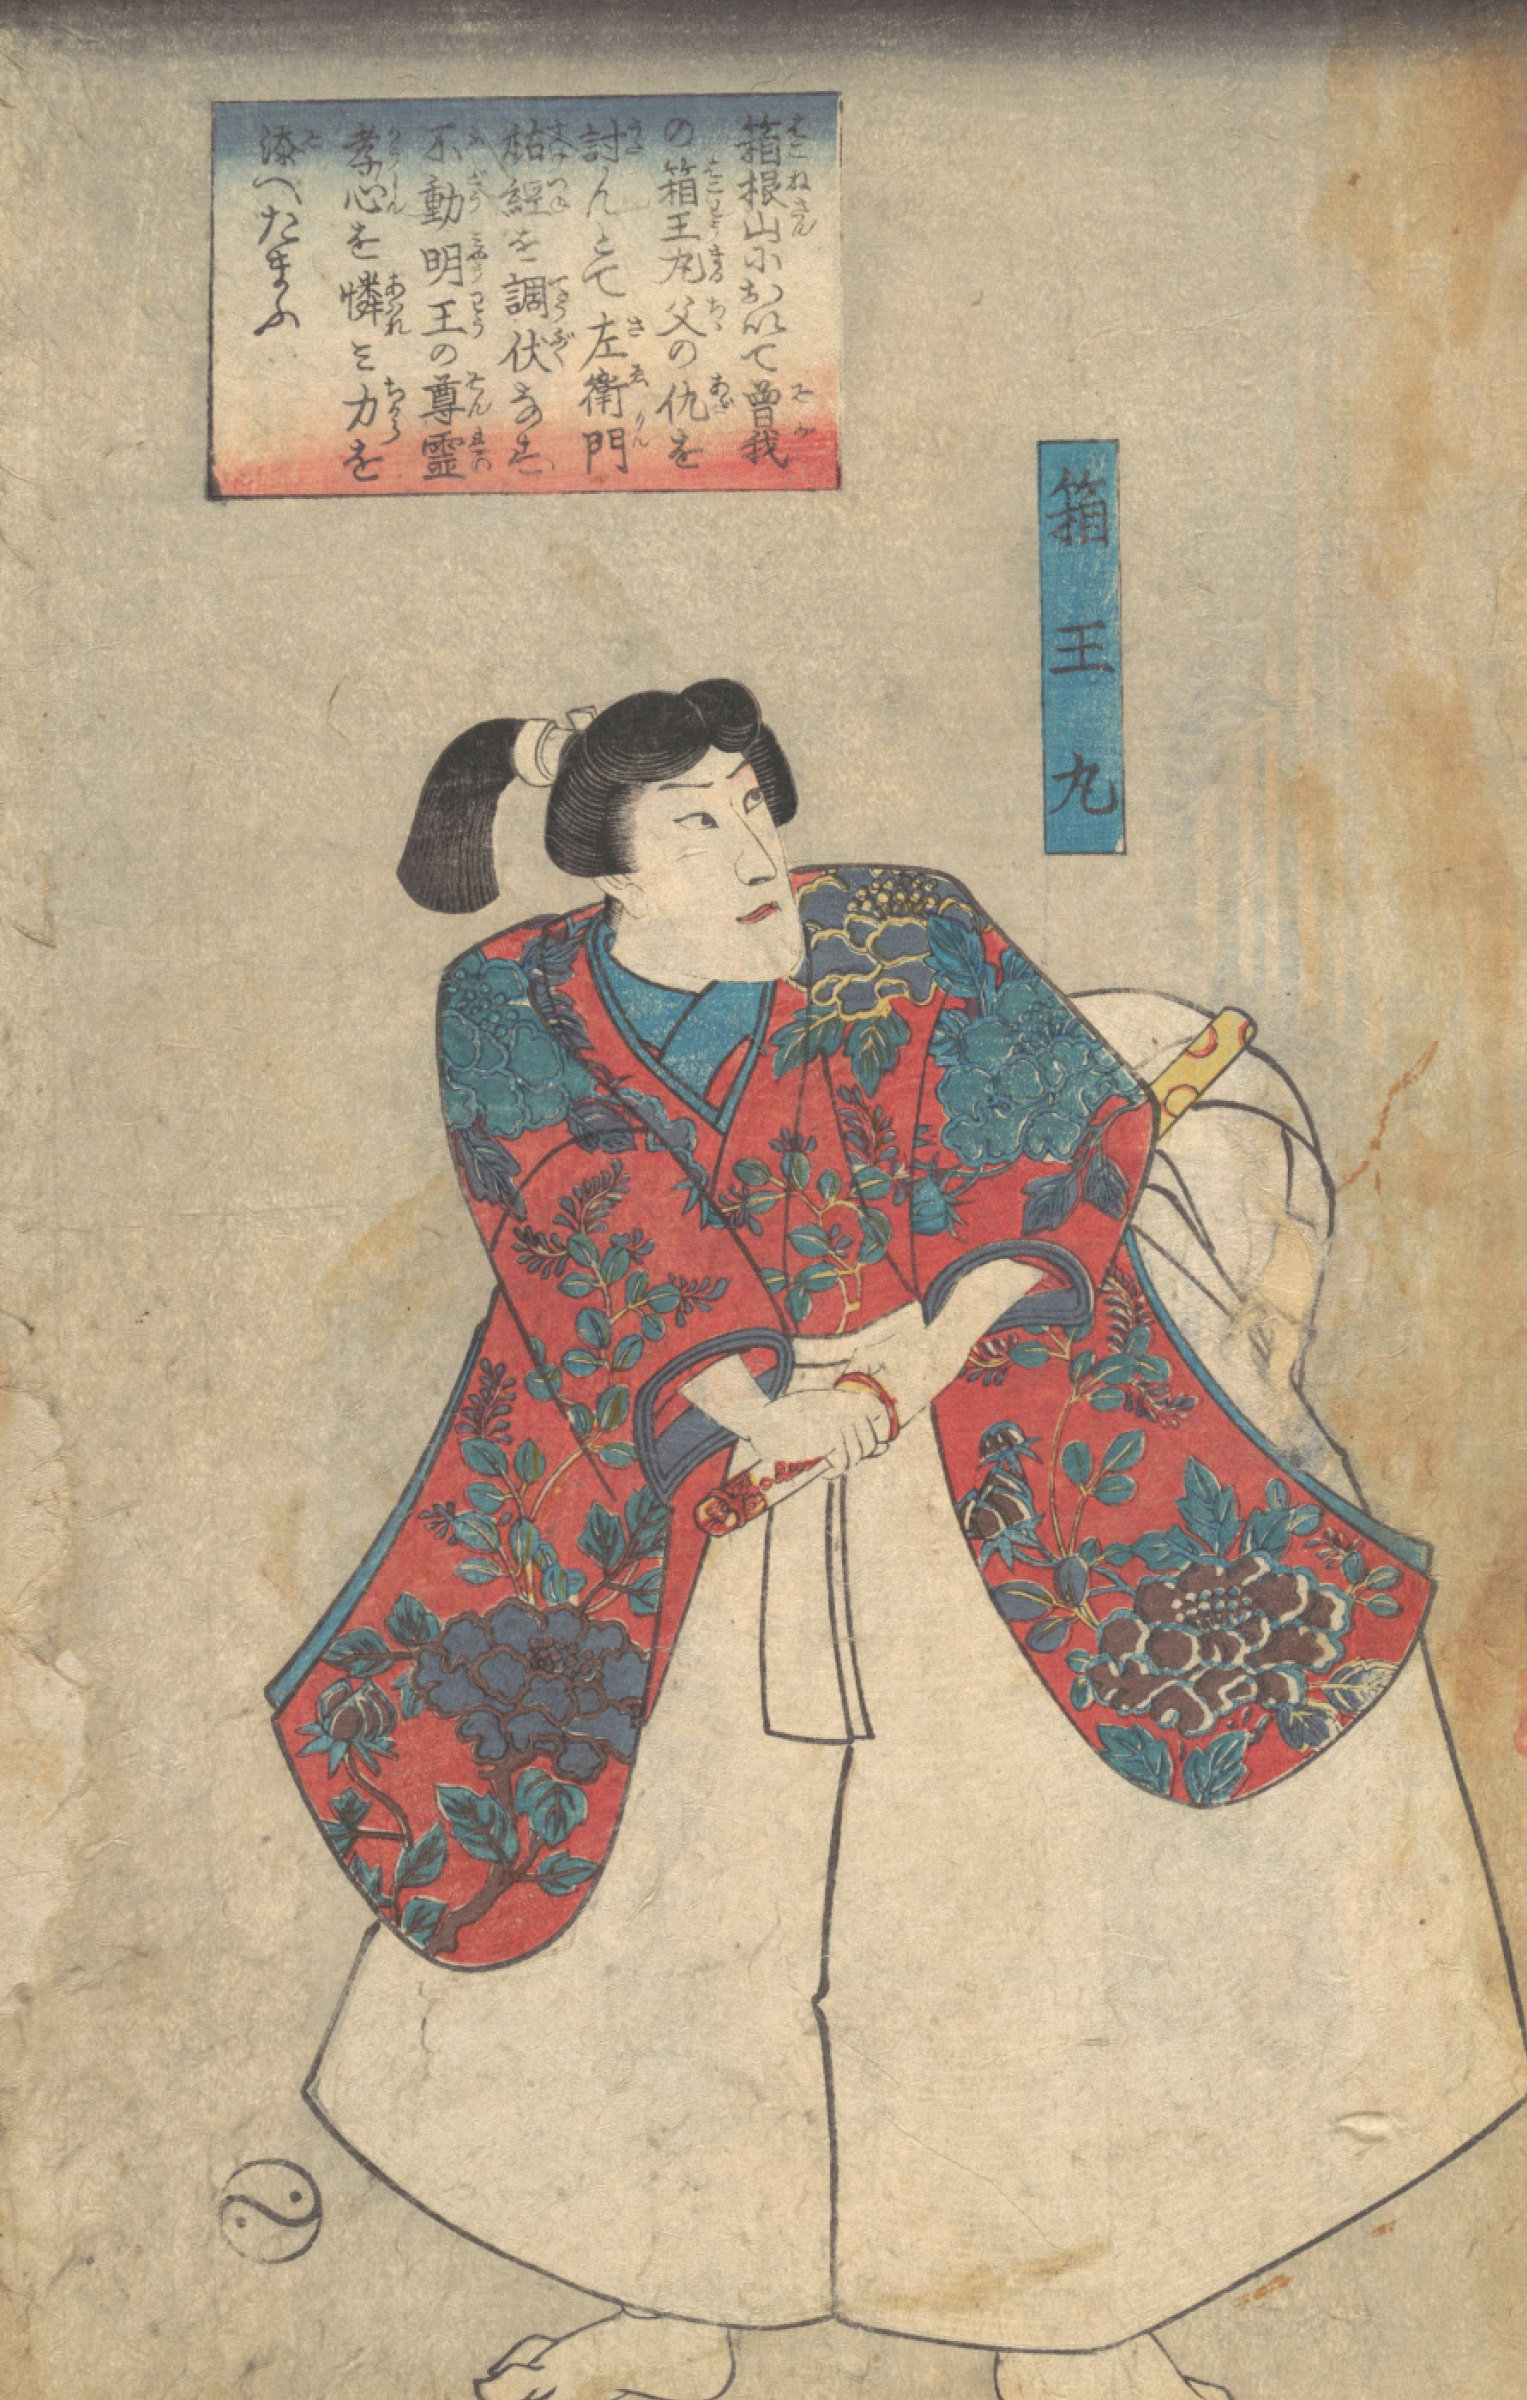 Buy a digital copy: Utagawa Kuniyoshi - Hakamaru, New York City 